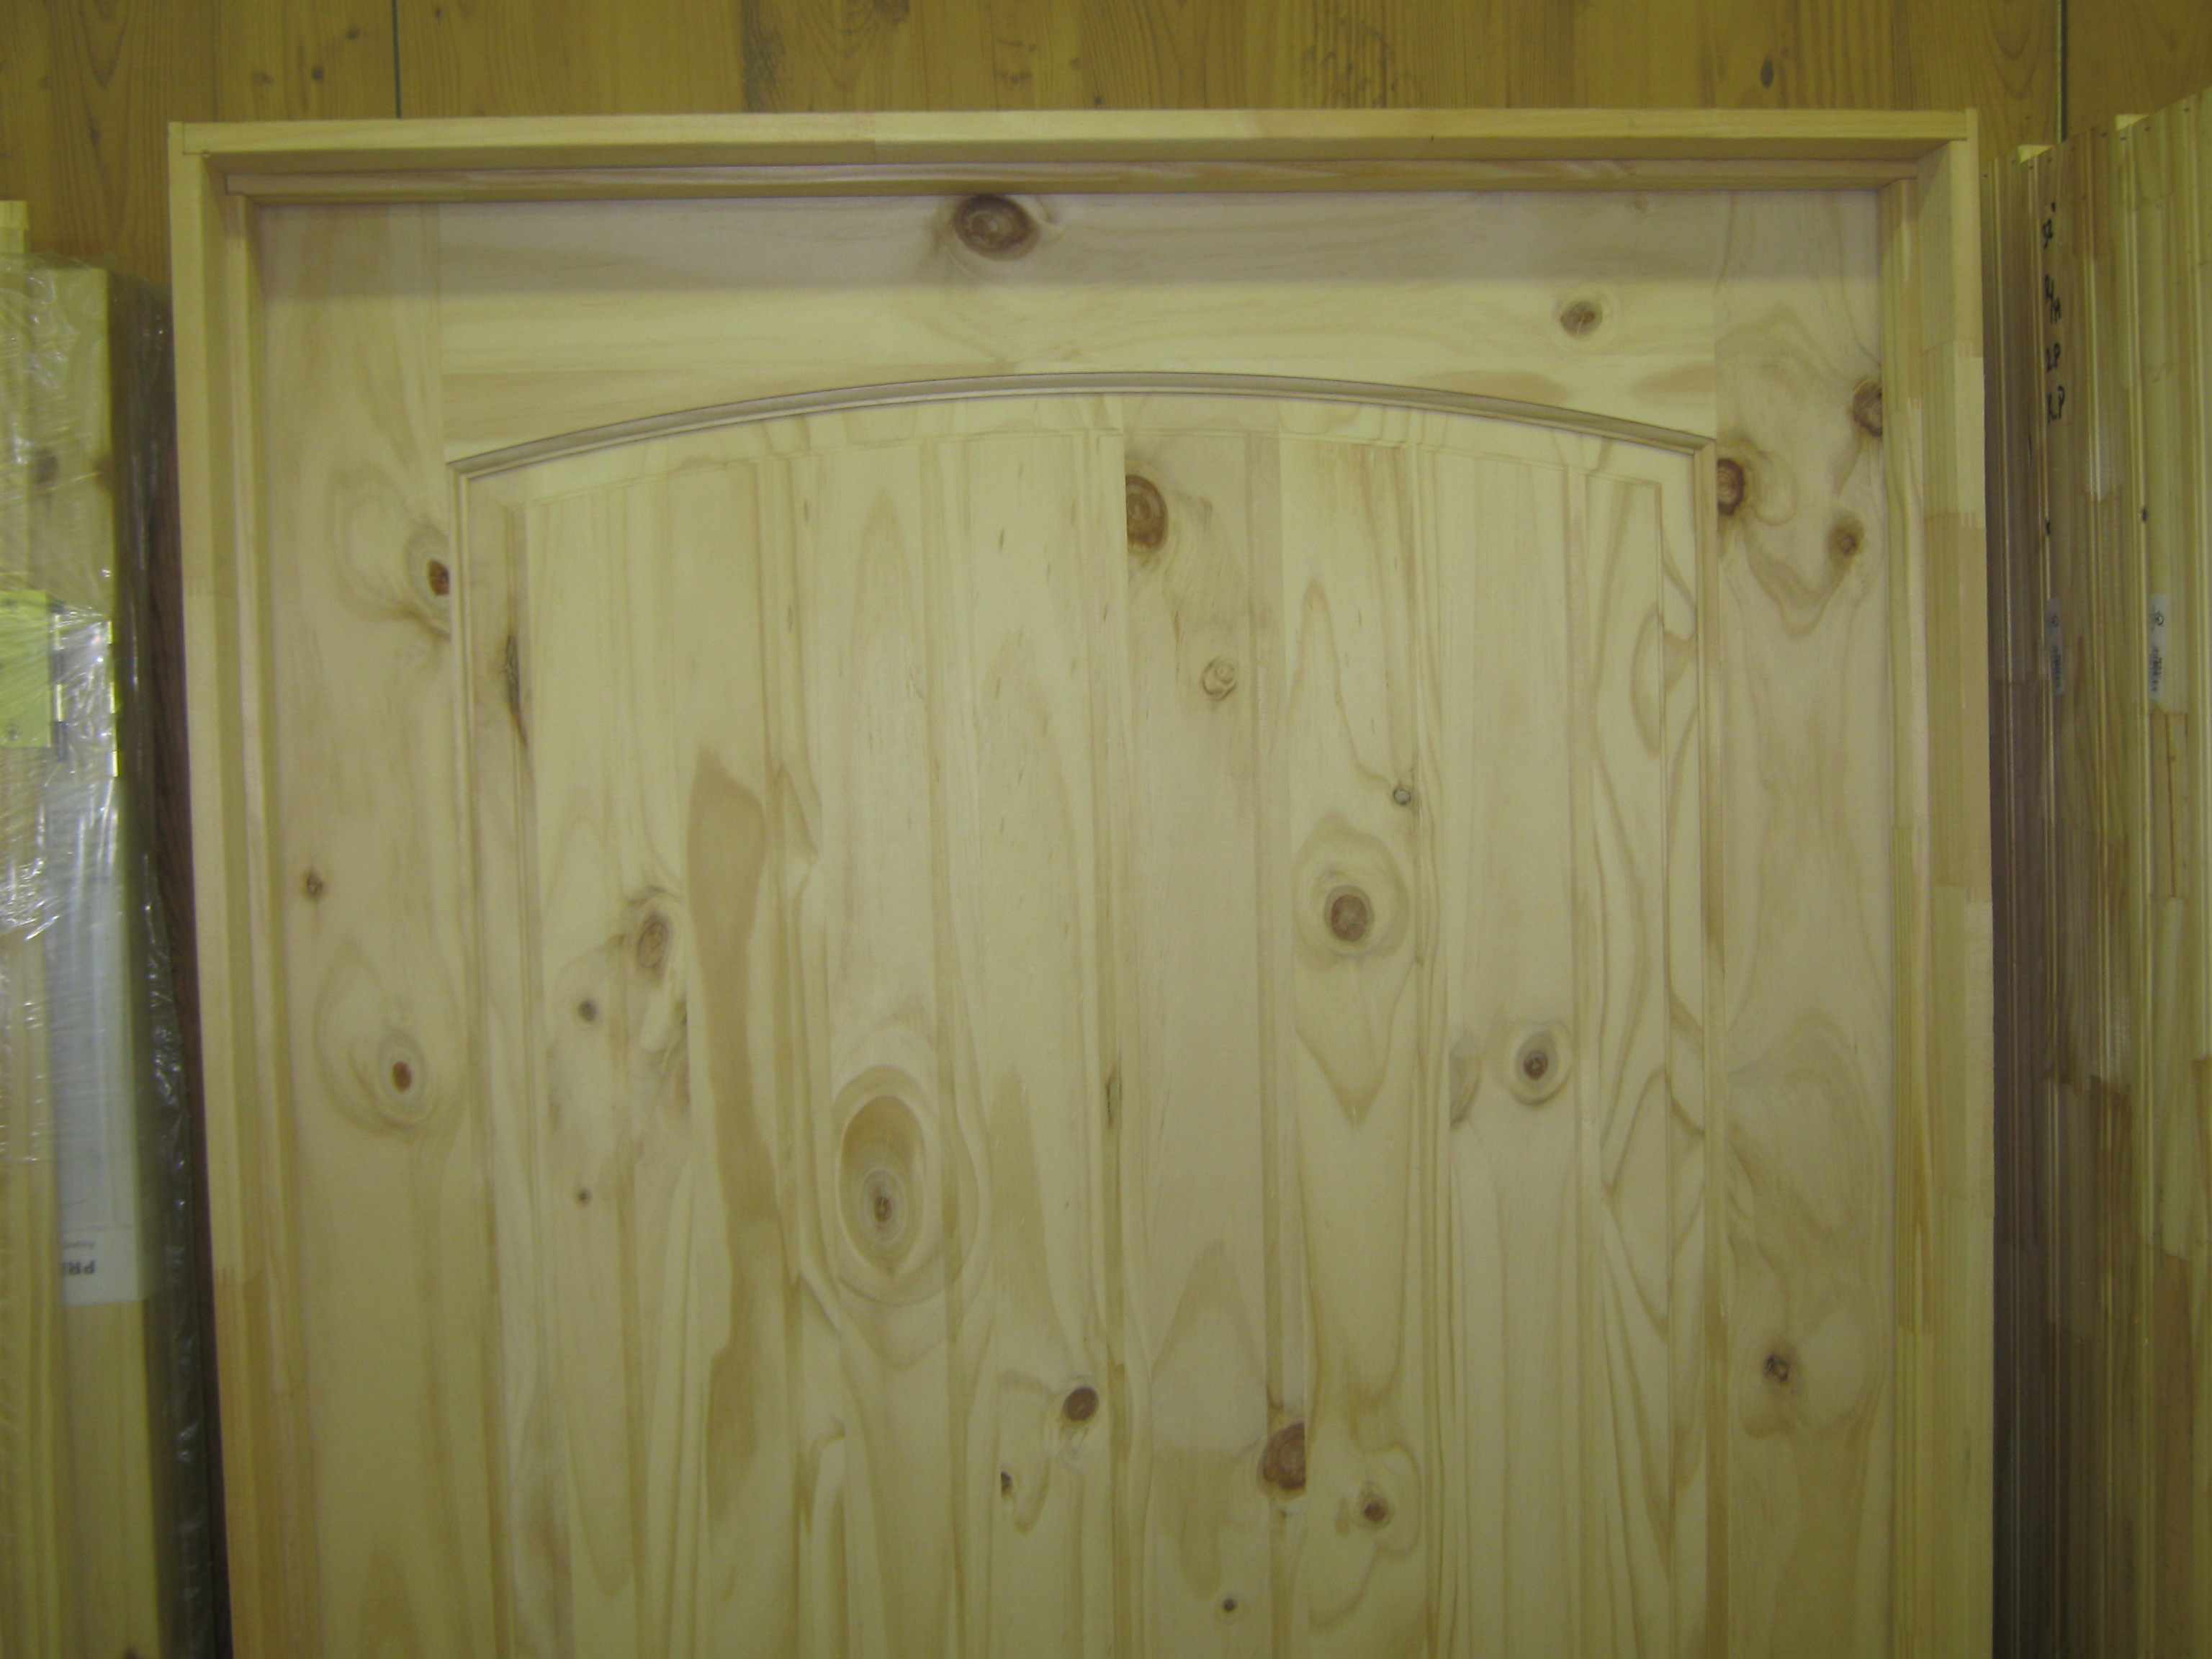 2 8 x 6 8 interior doors in knotty pine